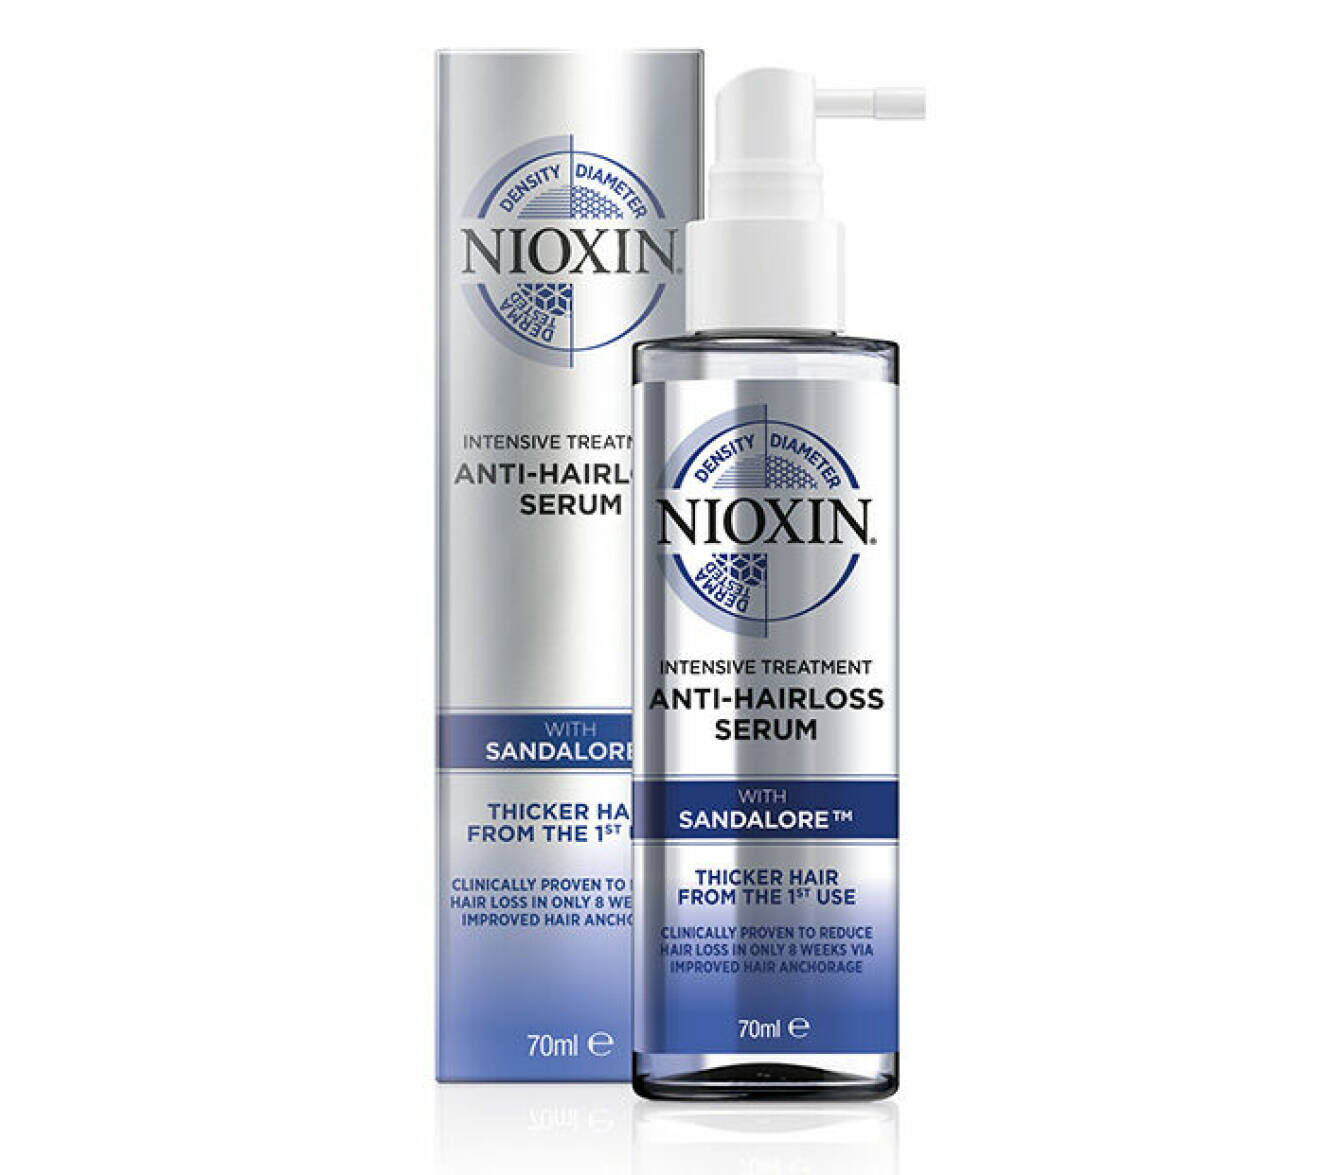 nixoin serum håravfall